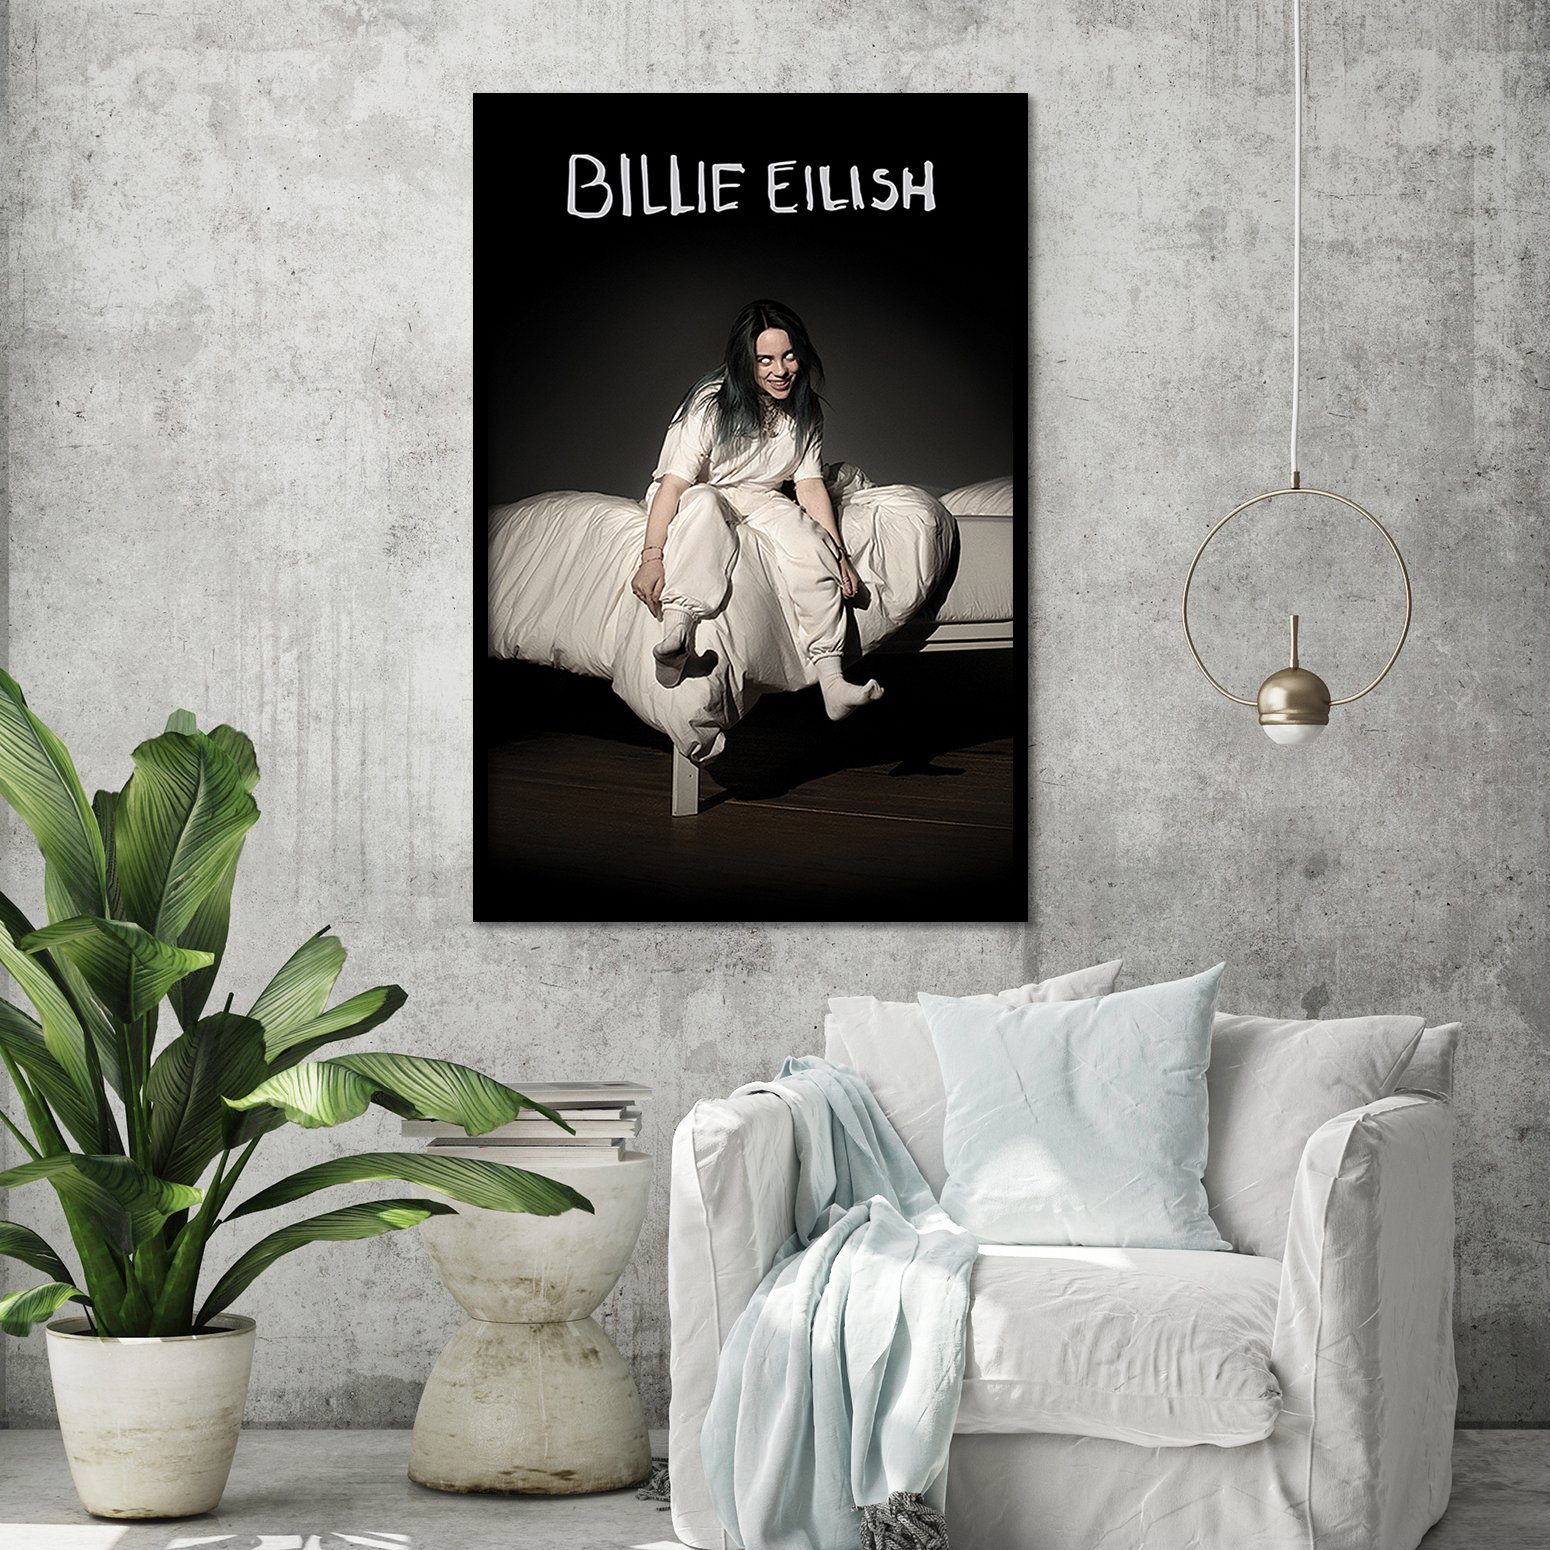 When We All Fall Do Poster Poster Asleep PYRAMID Billie Eilish Go Where We